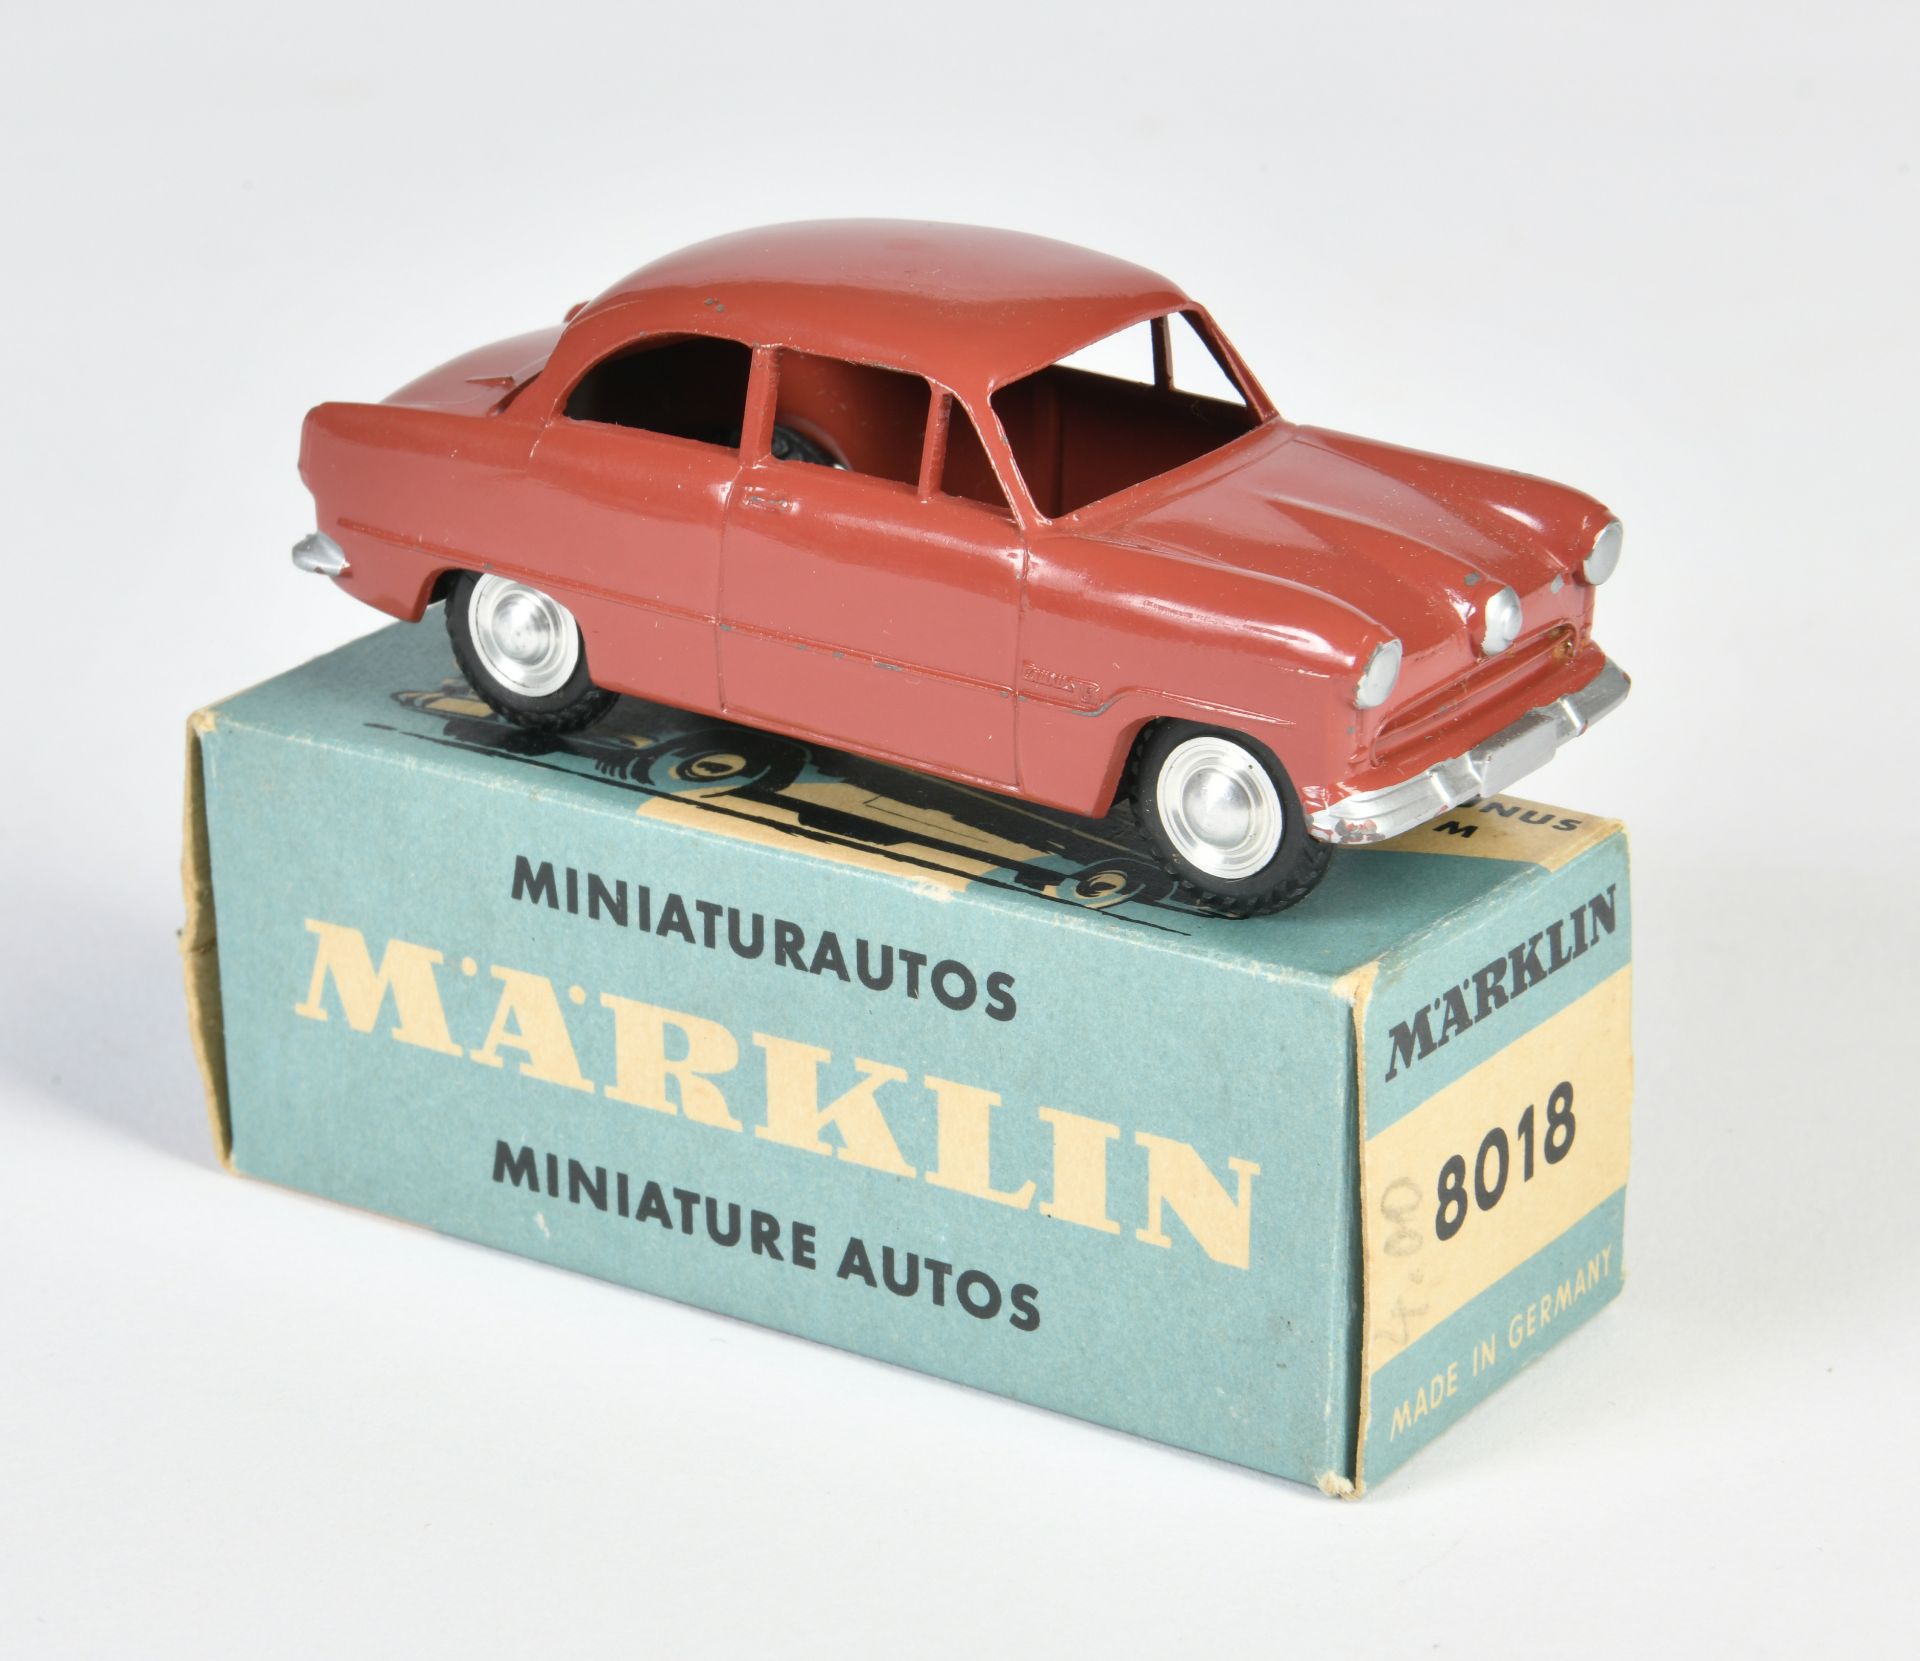 Märklin, Ford Taunus 8018, W.-Germany, 1:43, diecast, box C 2, C 2+